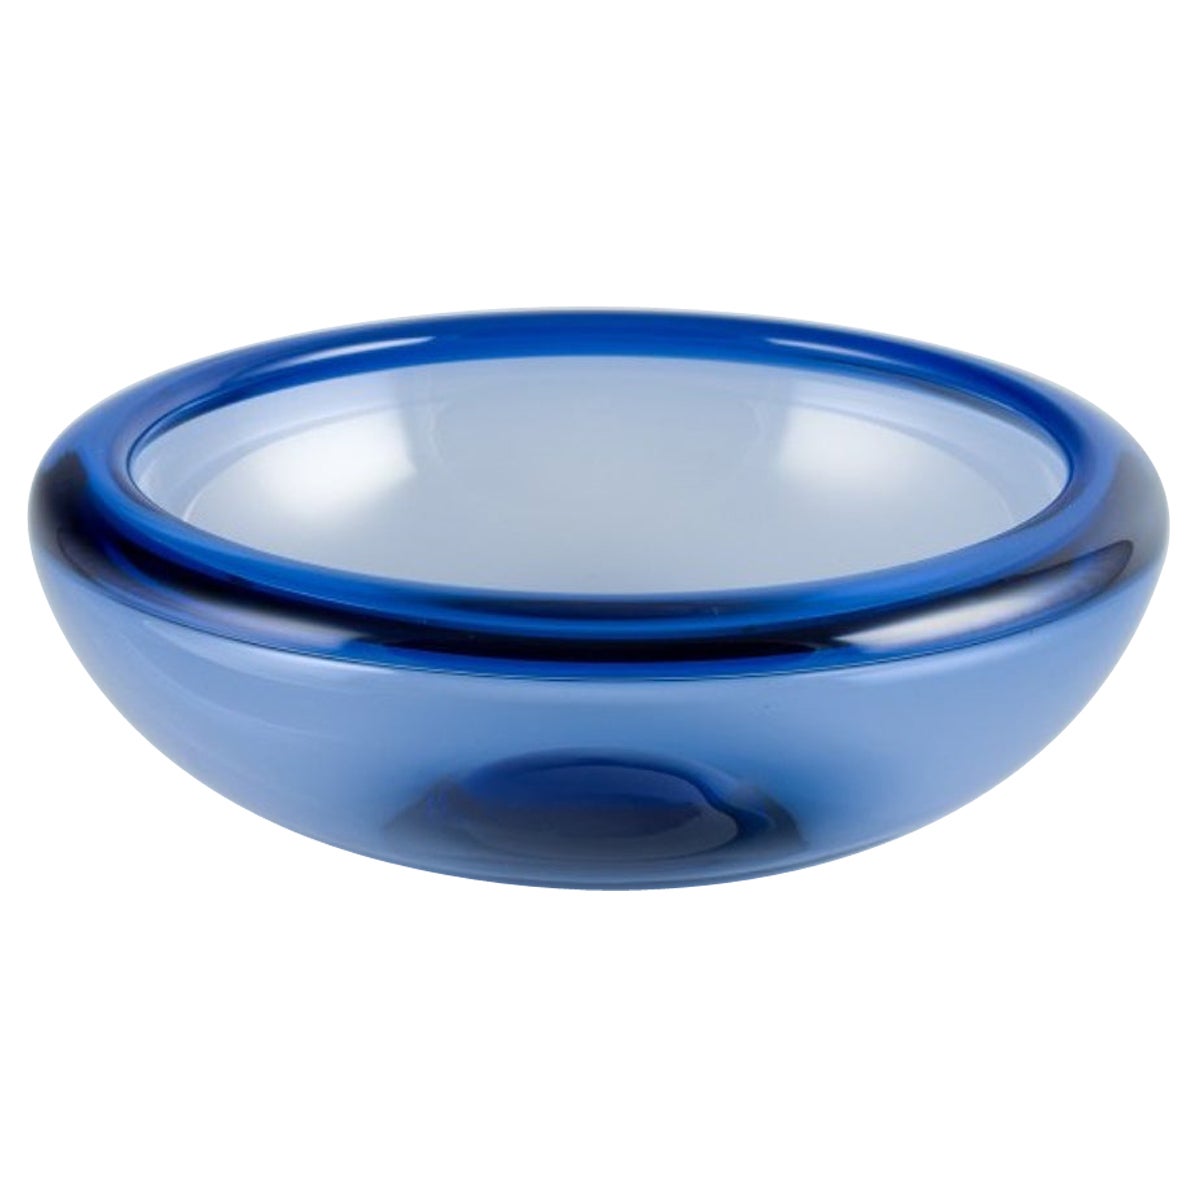 Holmegaard, Denmark. "Provence" bowl in blue art glass. 1970s.